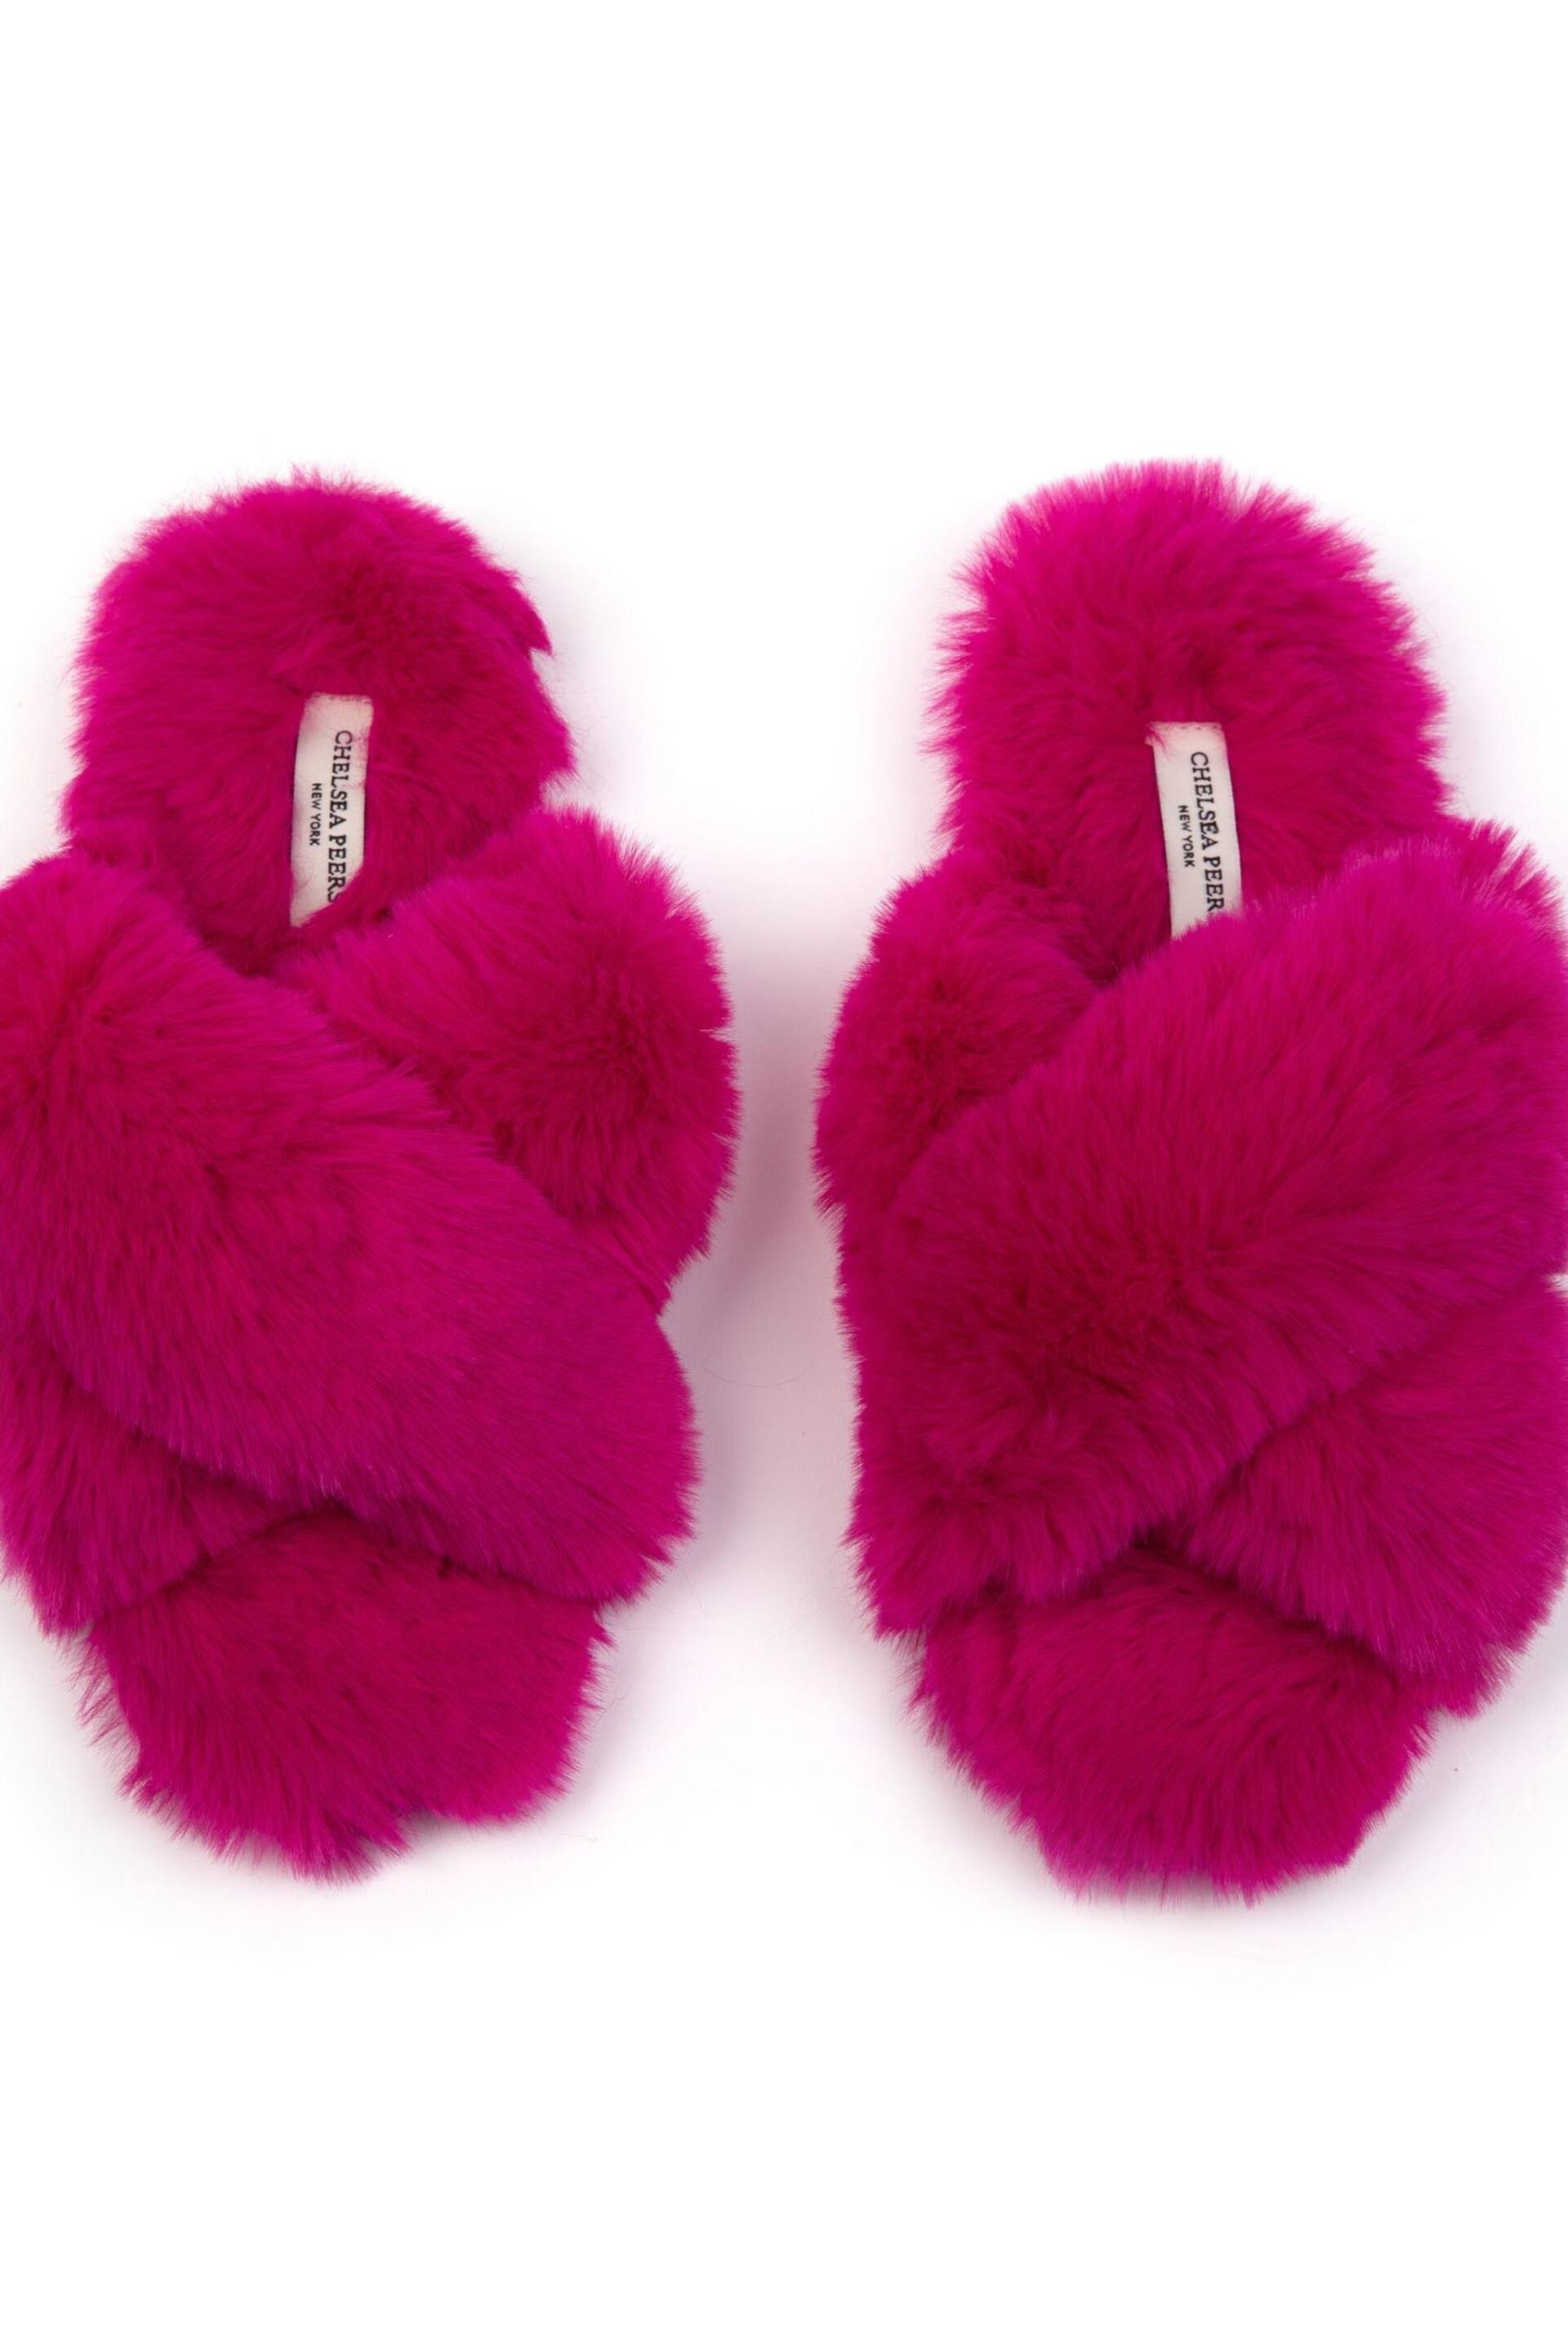 Chelsea Peers Pink Regular Fit Fluffy Cross Strap Slider Slippers - Image 2 of 5